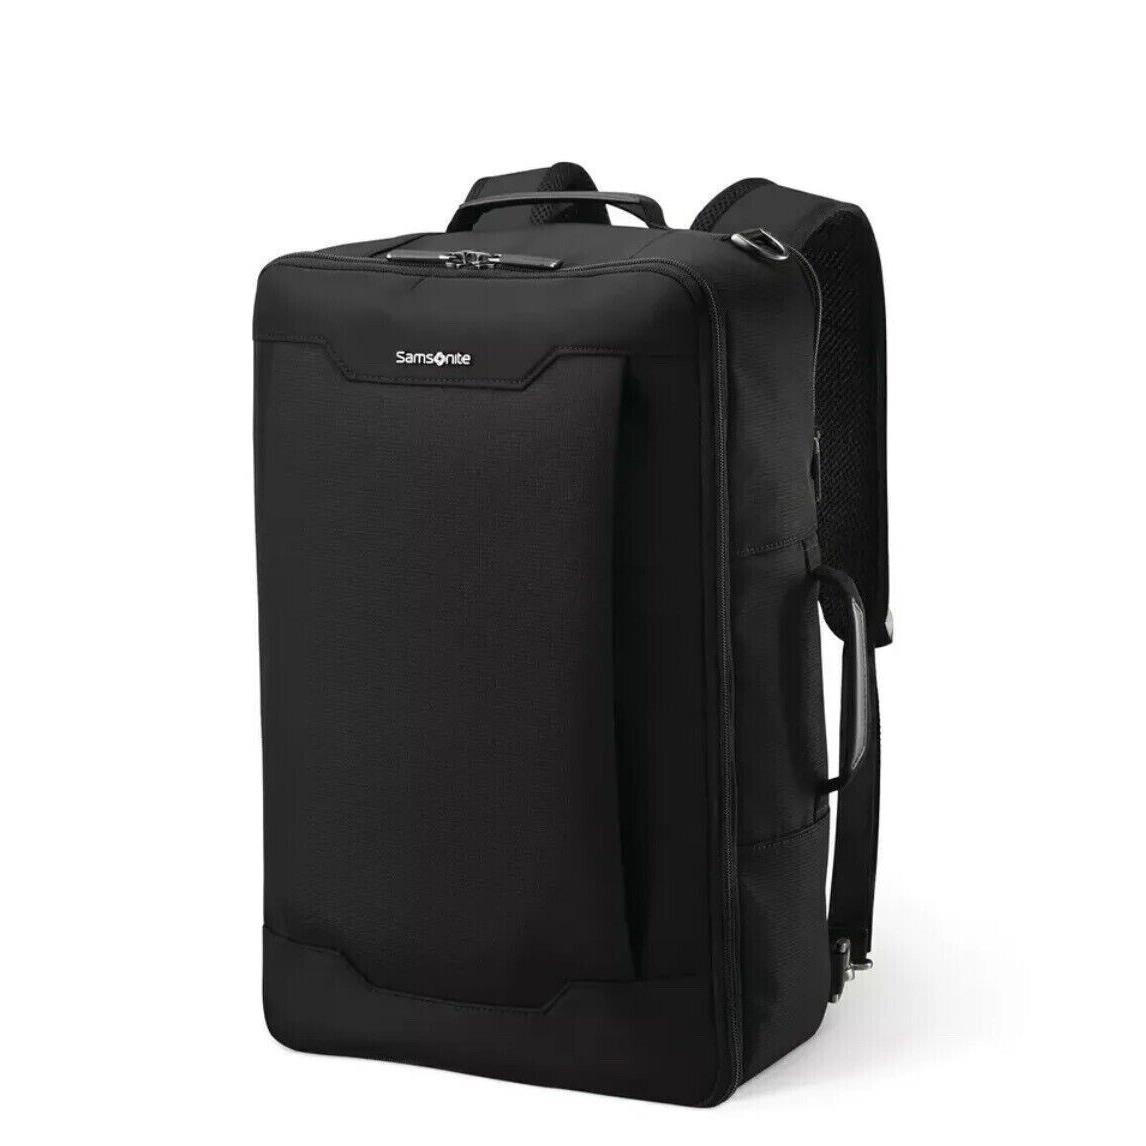 Samsonite Silhouette 17 Convertible Backpack Luggage - Black